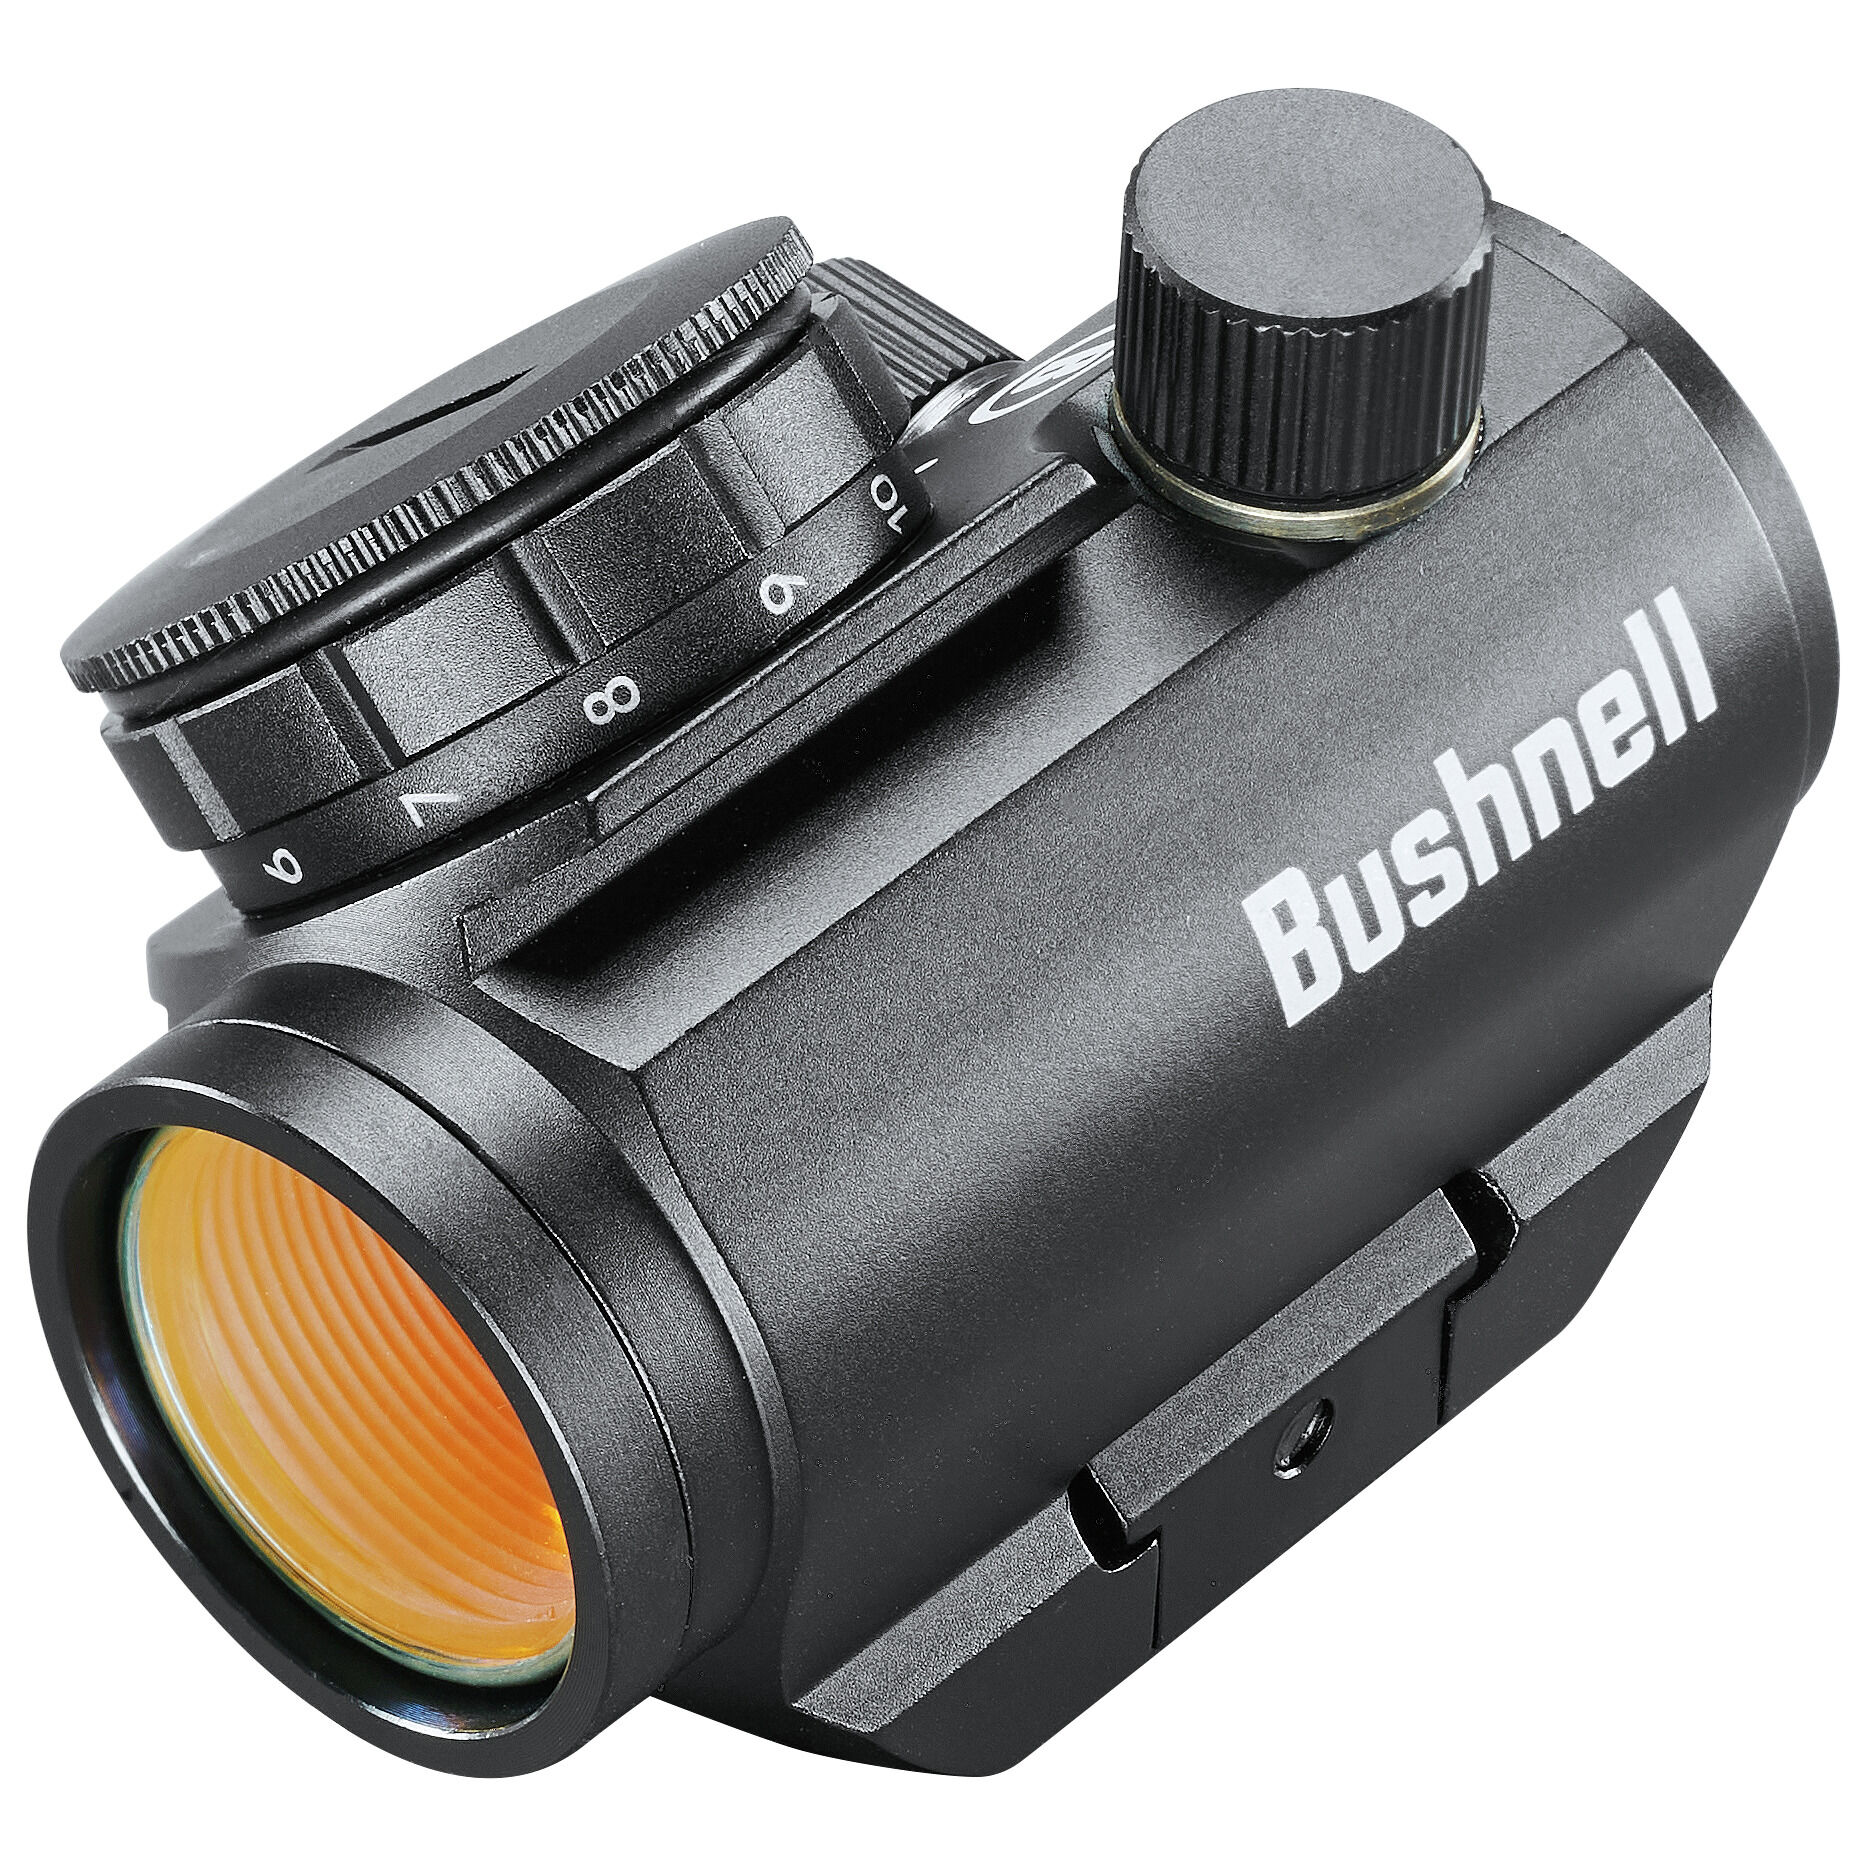 BUSHNELL 731303 Trophy 1 x 25mm Red Dot Riflescope 